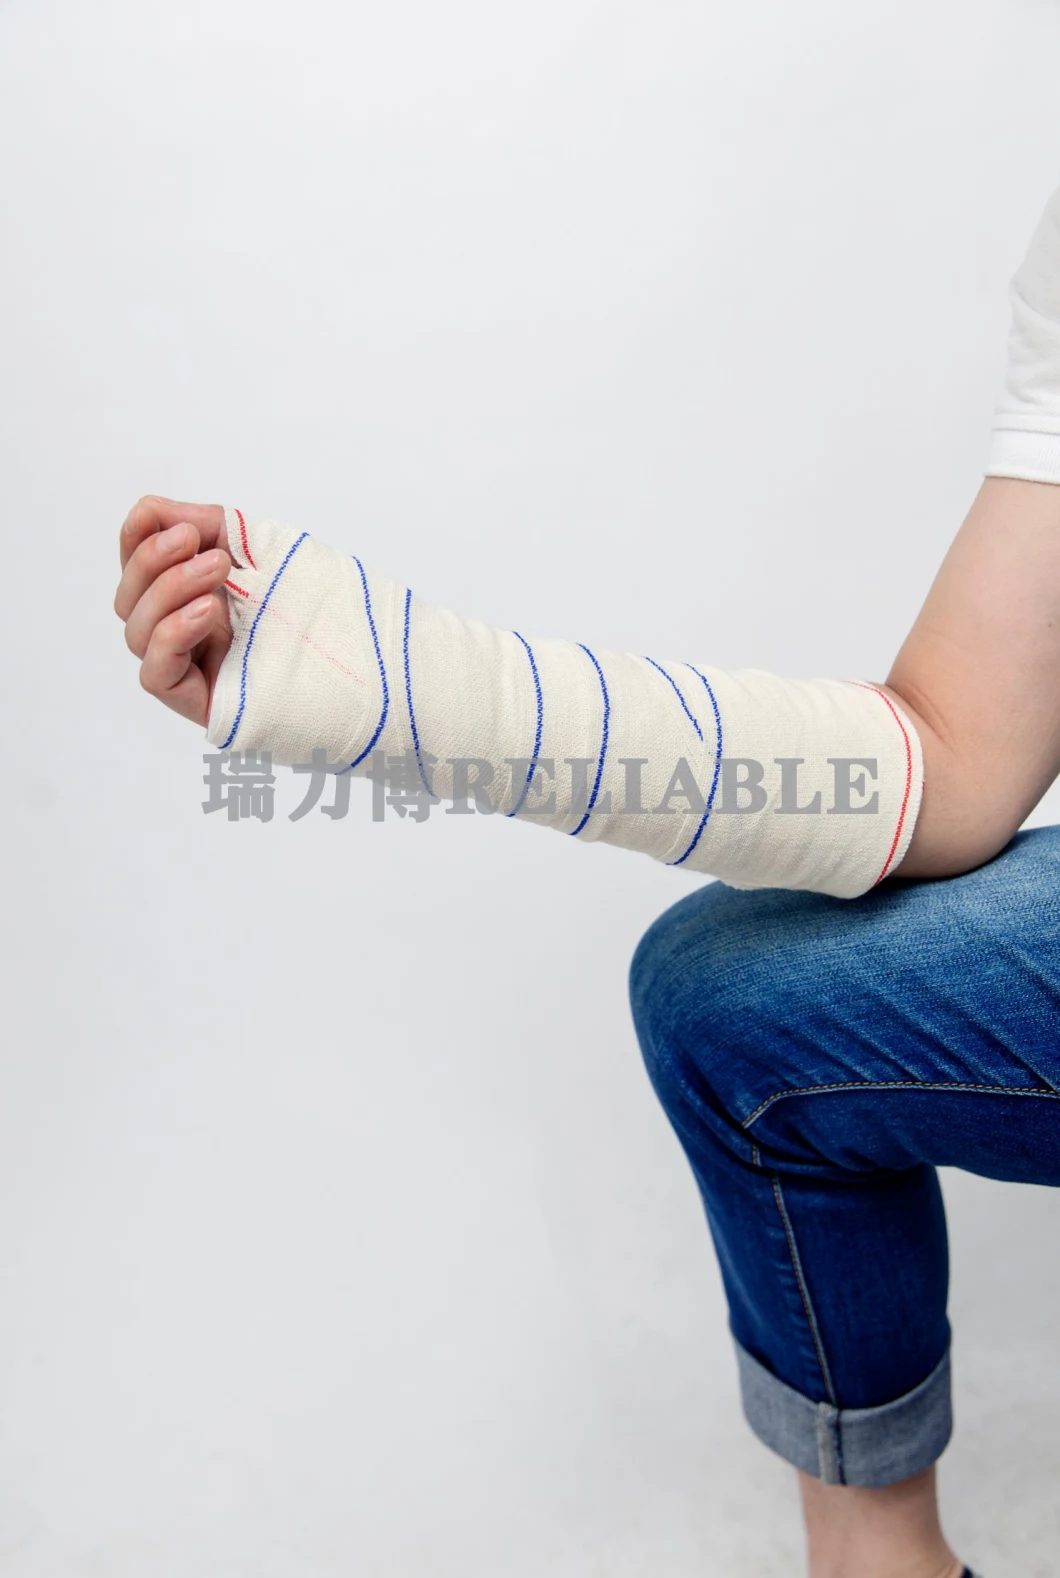 Othopedic Leg Splint Medical Casting Splint Orthopedic Splint Emergency